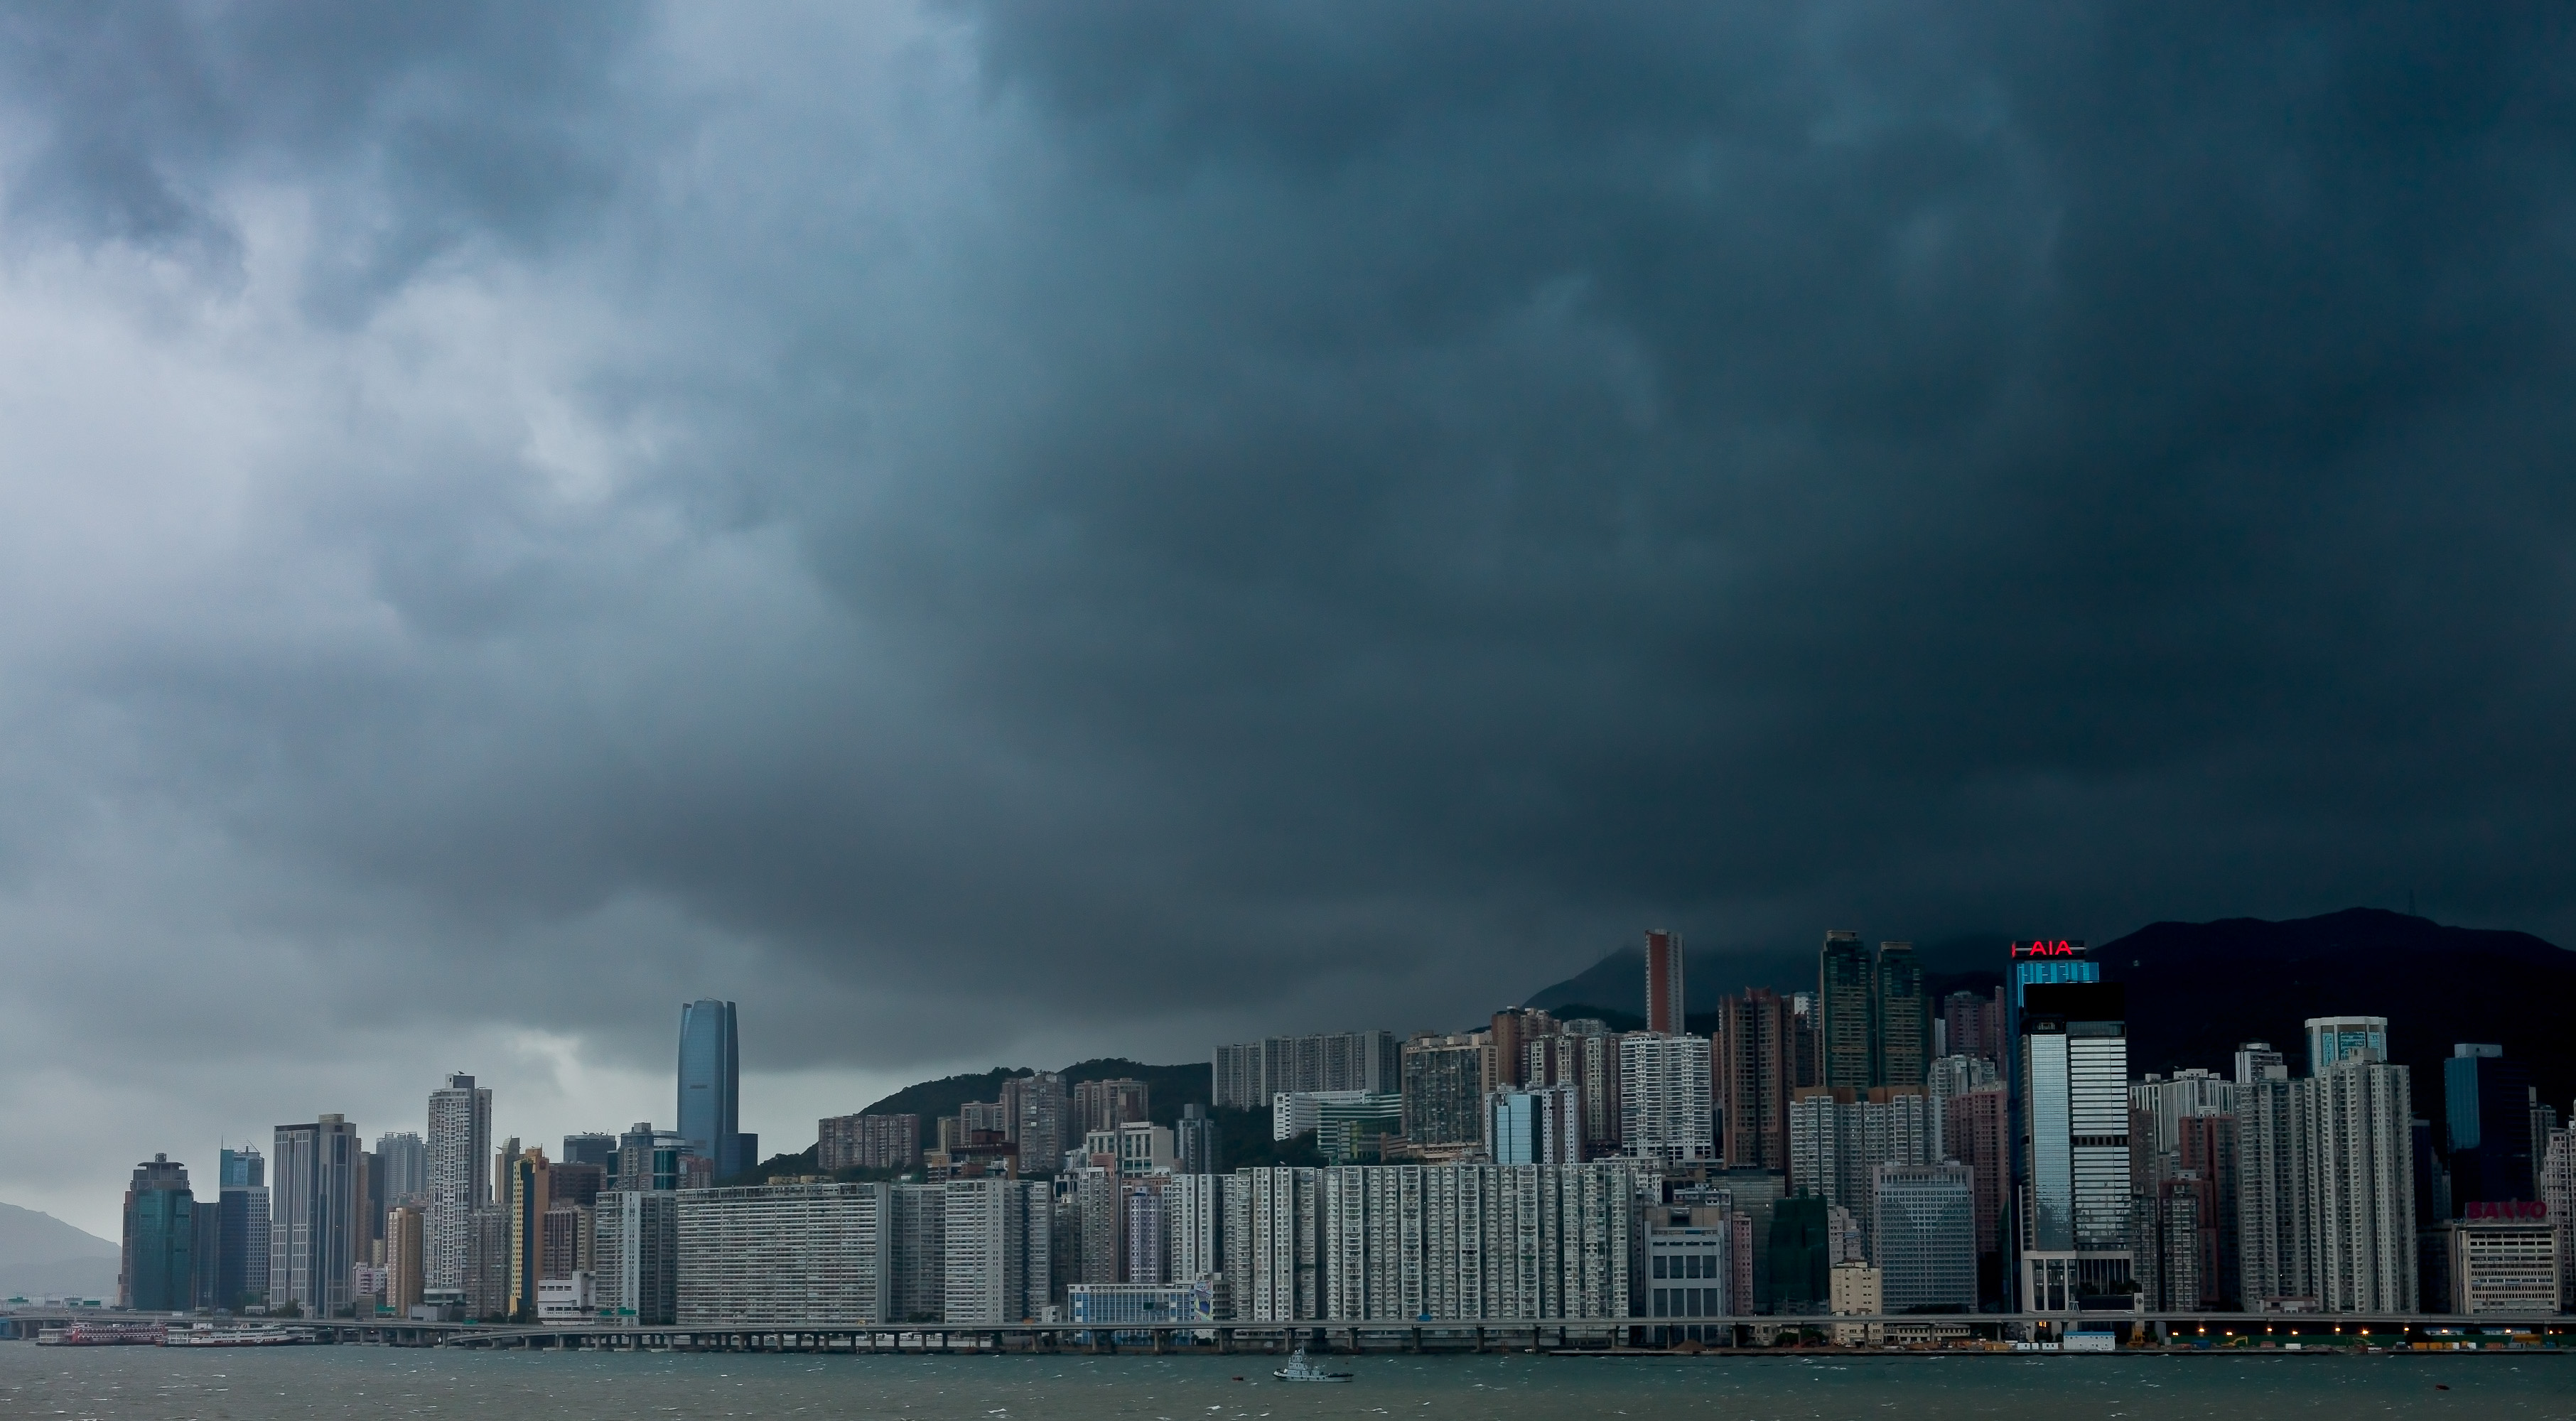 Hong Kong just before the storm